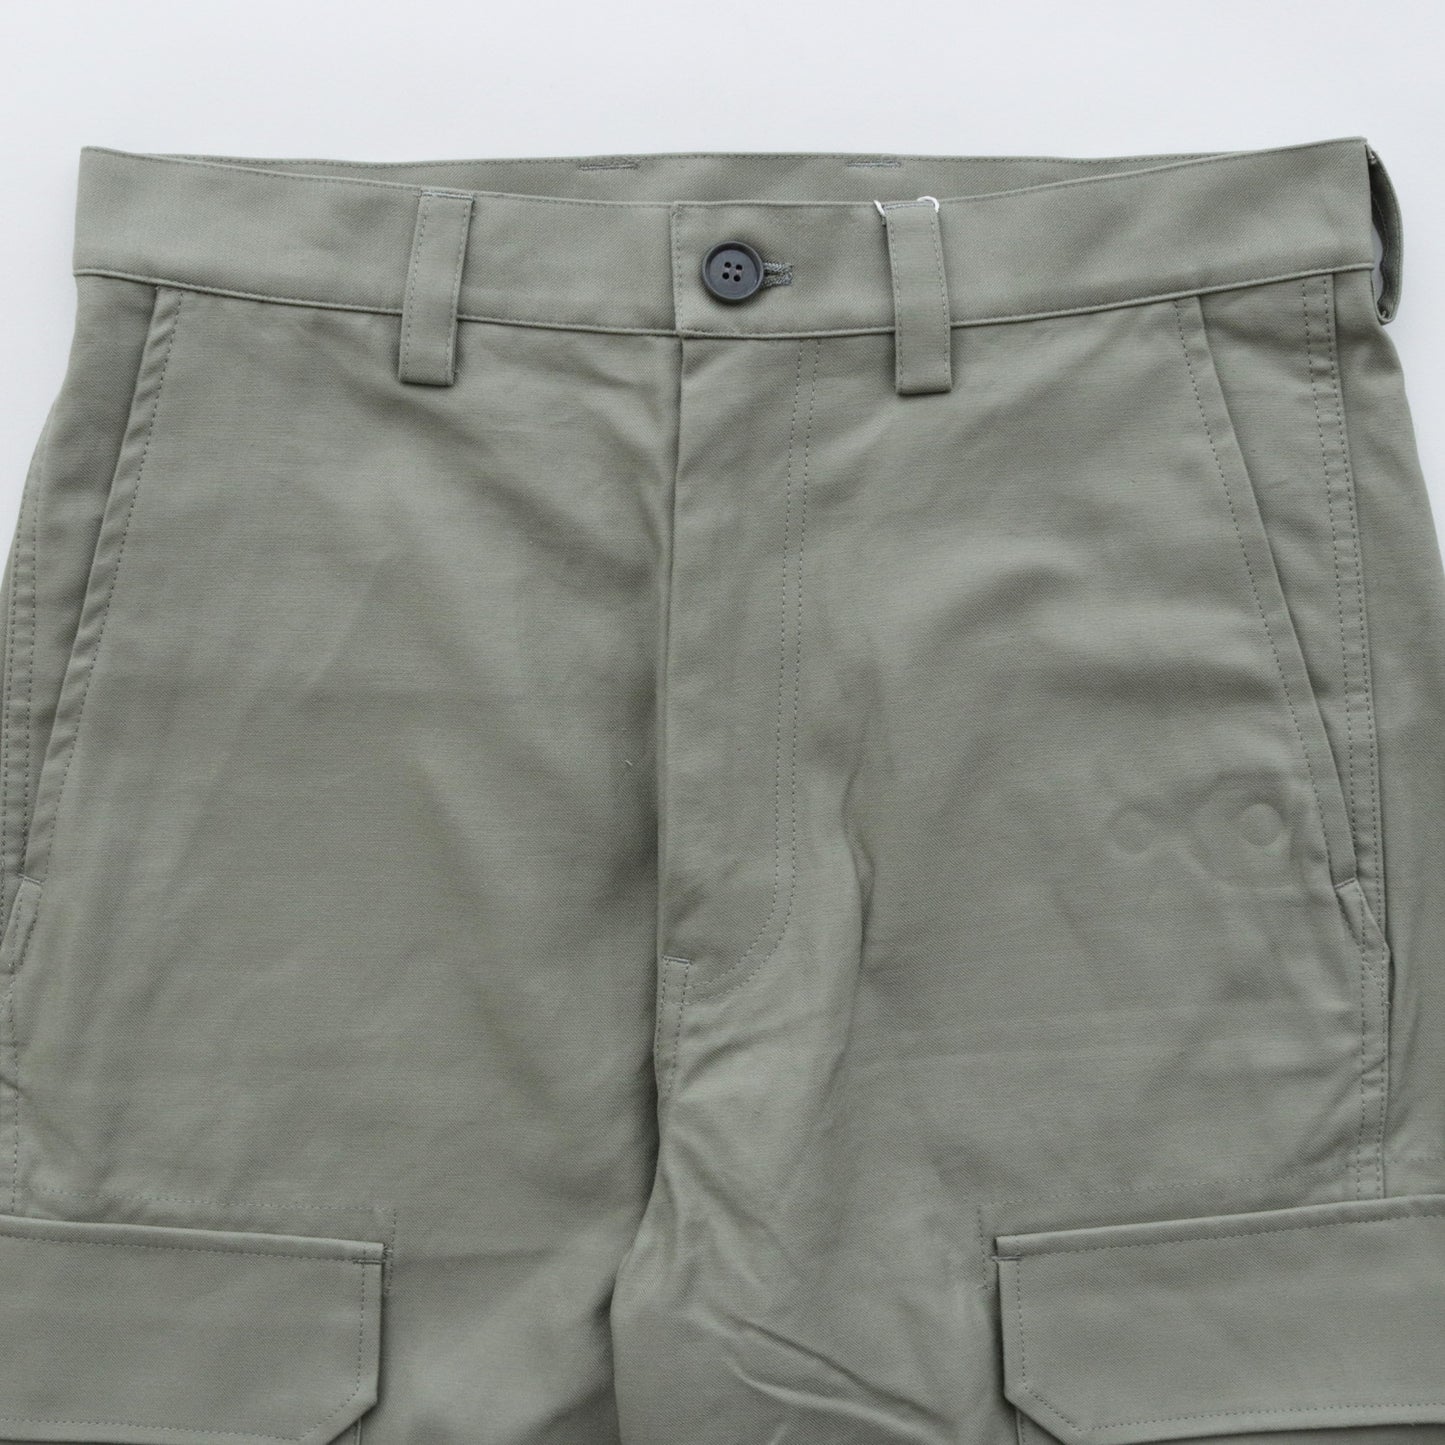 Cargo Pants #khaki [AL23W-PT04]